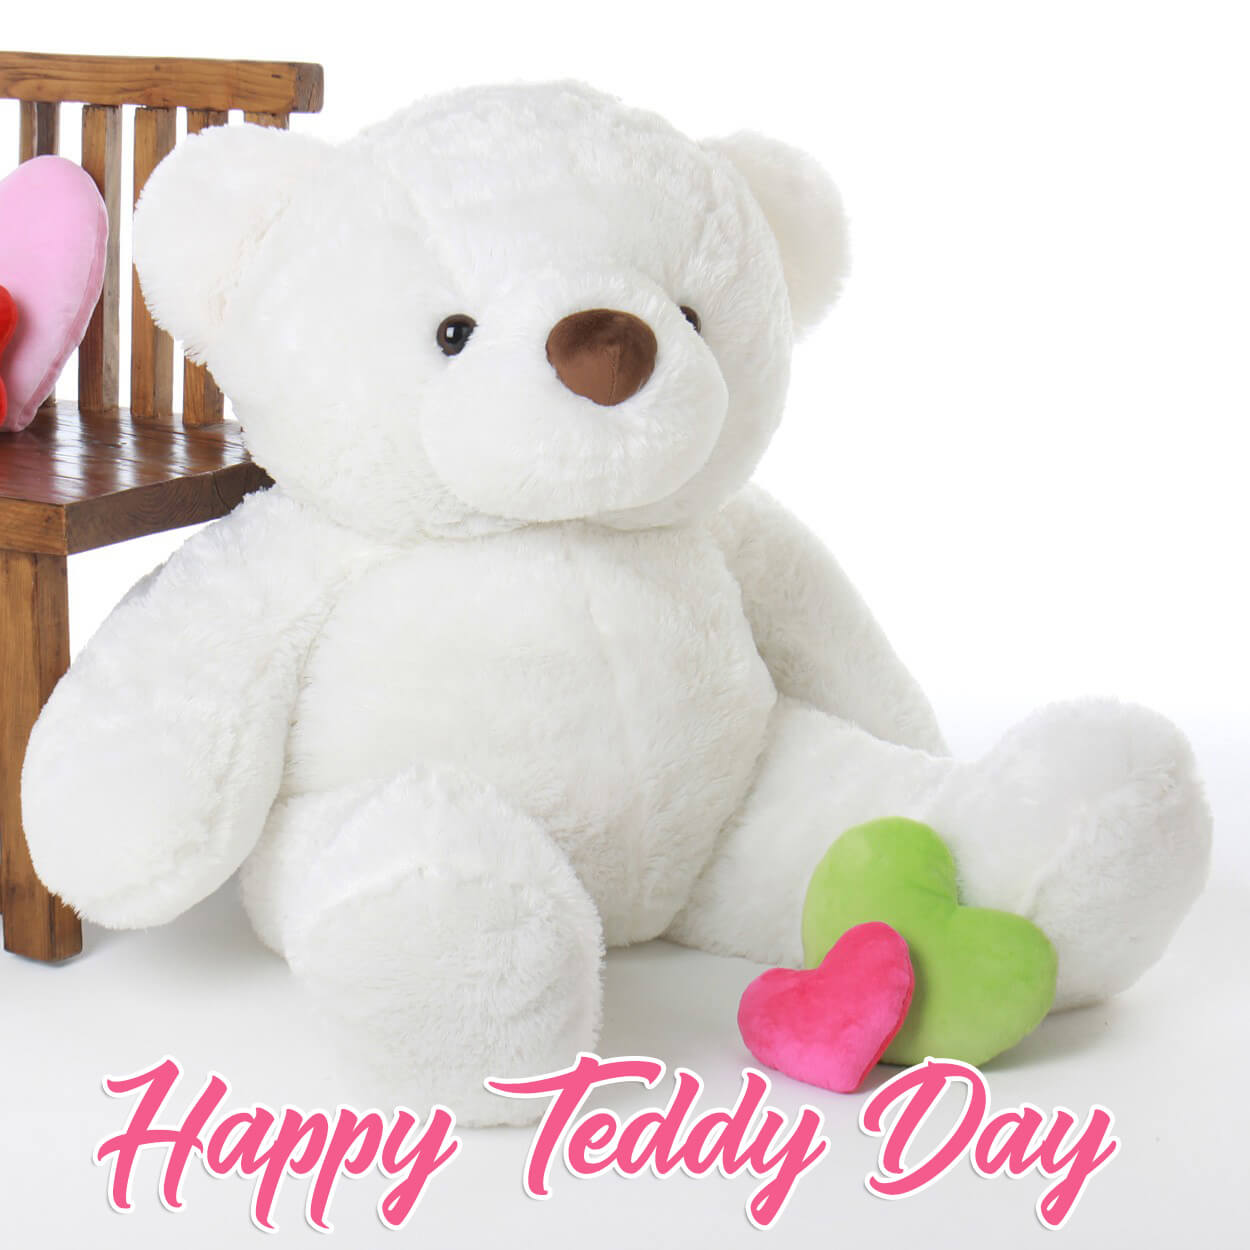 Happy Teddy Day Wishes White Bear Image February 10th - Teddy Bear Good  Night Baby - 1250x1250 Wallpaper 